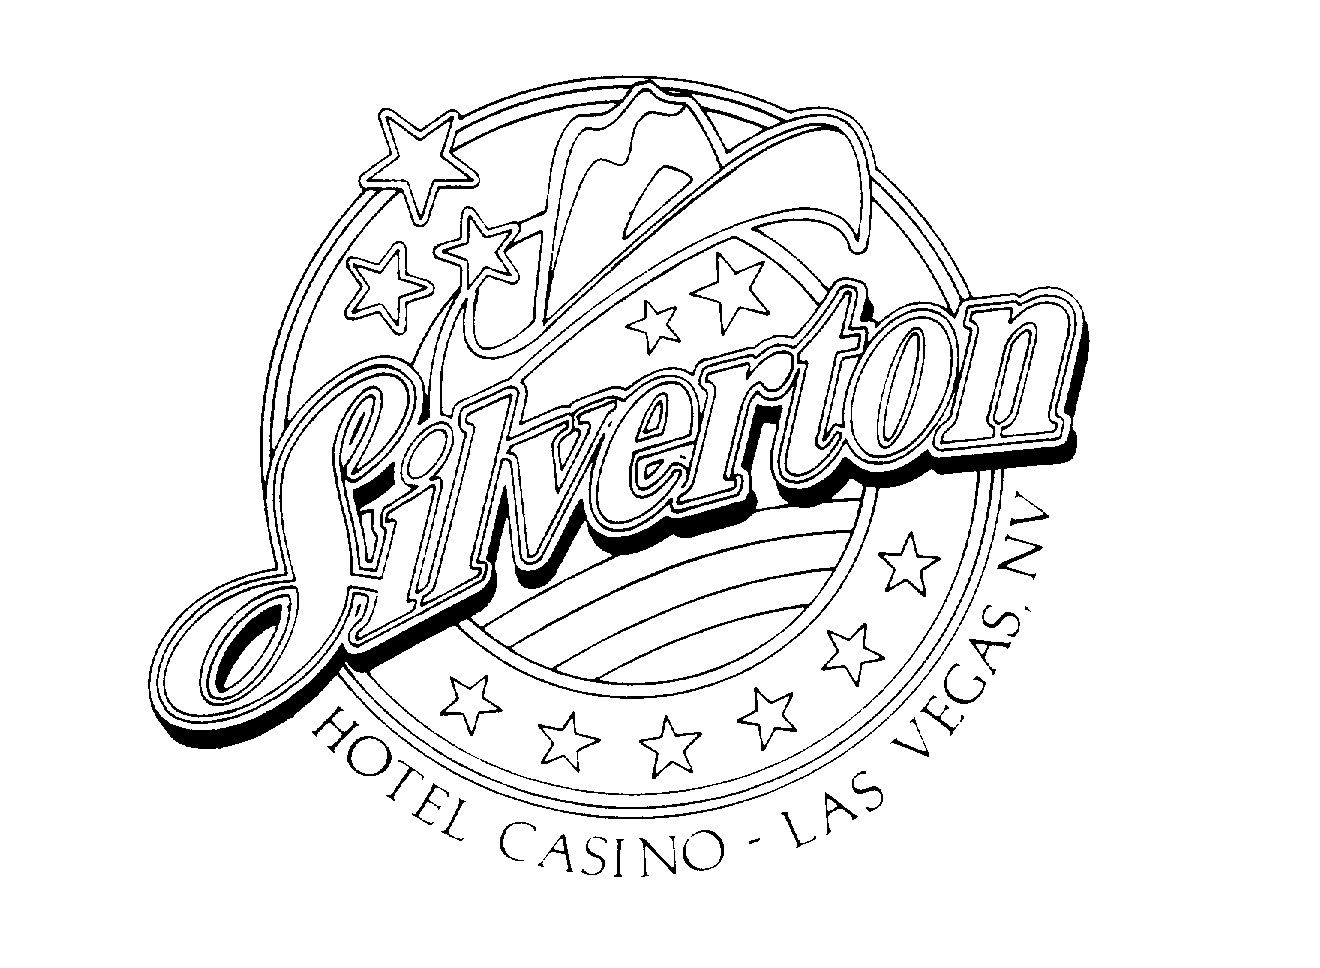 Trademark Logo SILVERTON